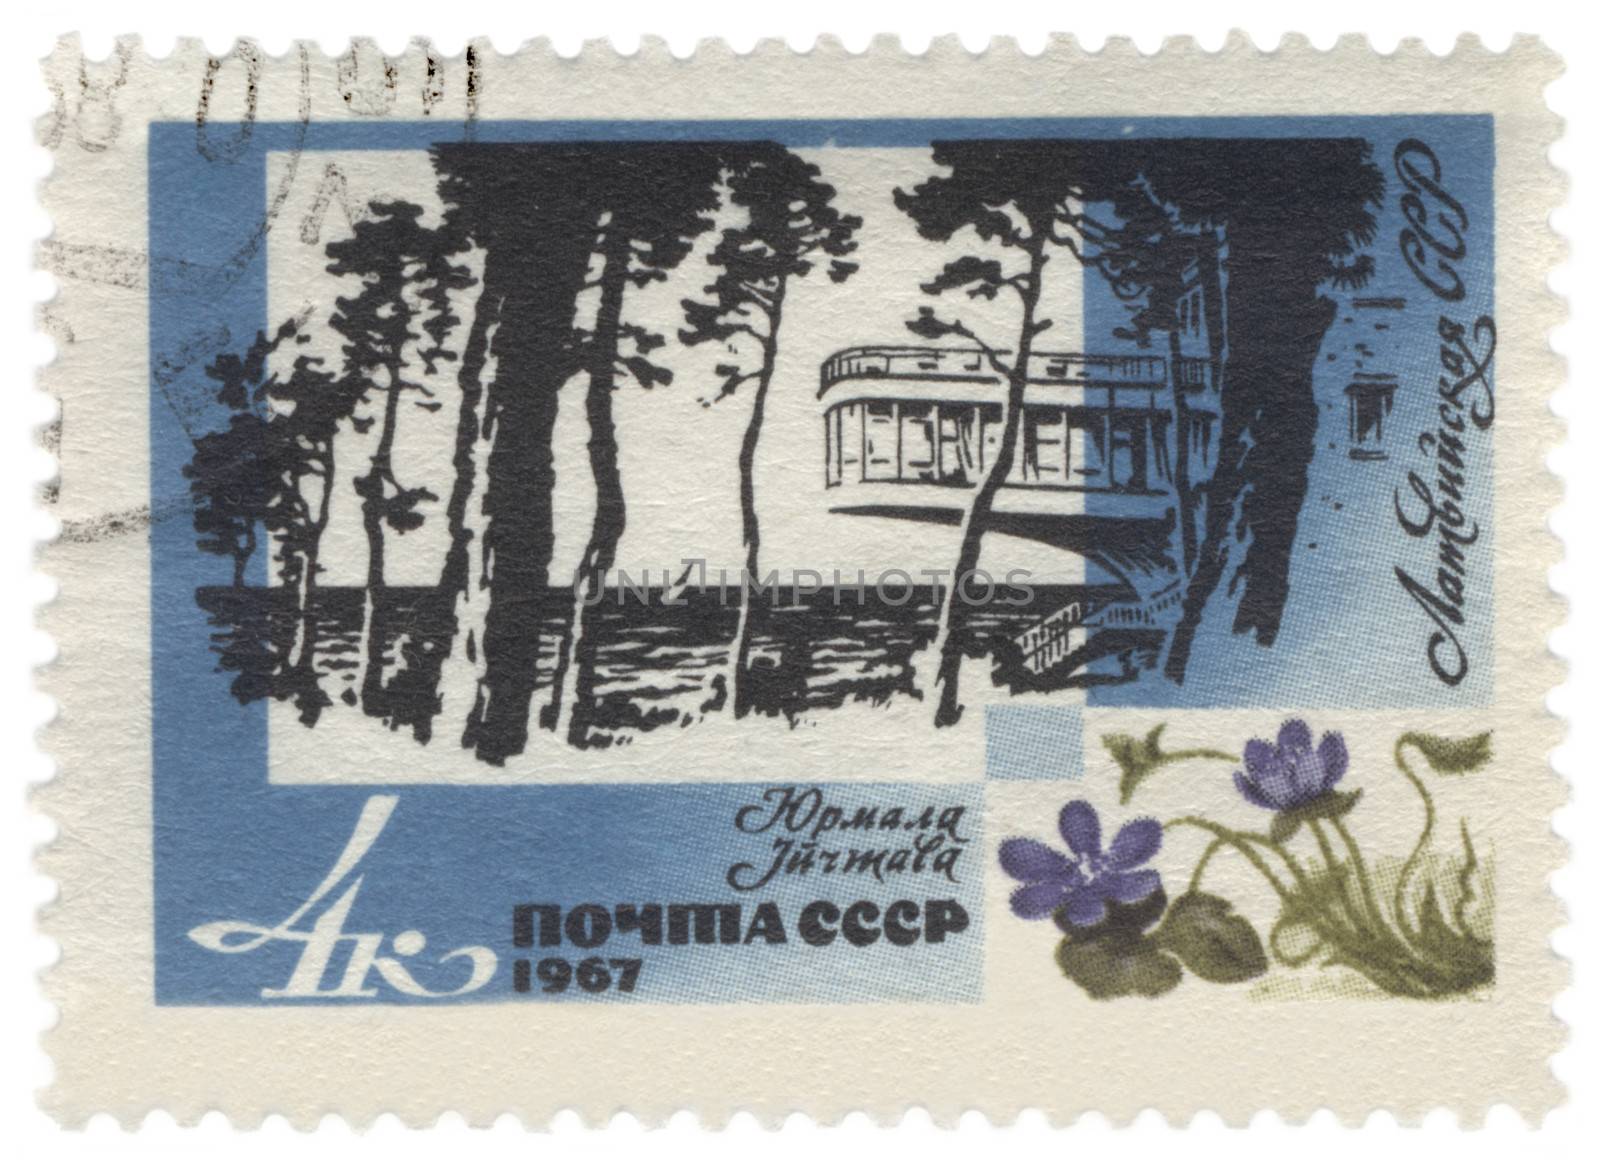 Jurmala resort in Latvia on post stamp by wander